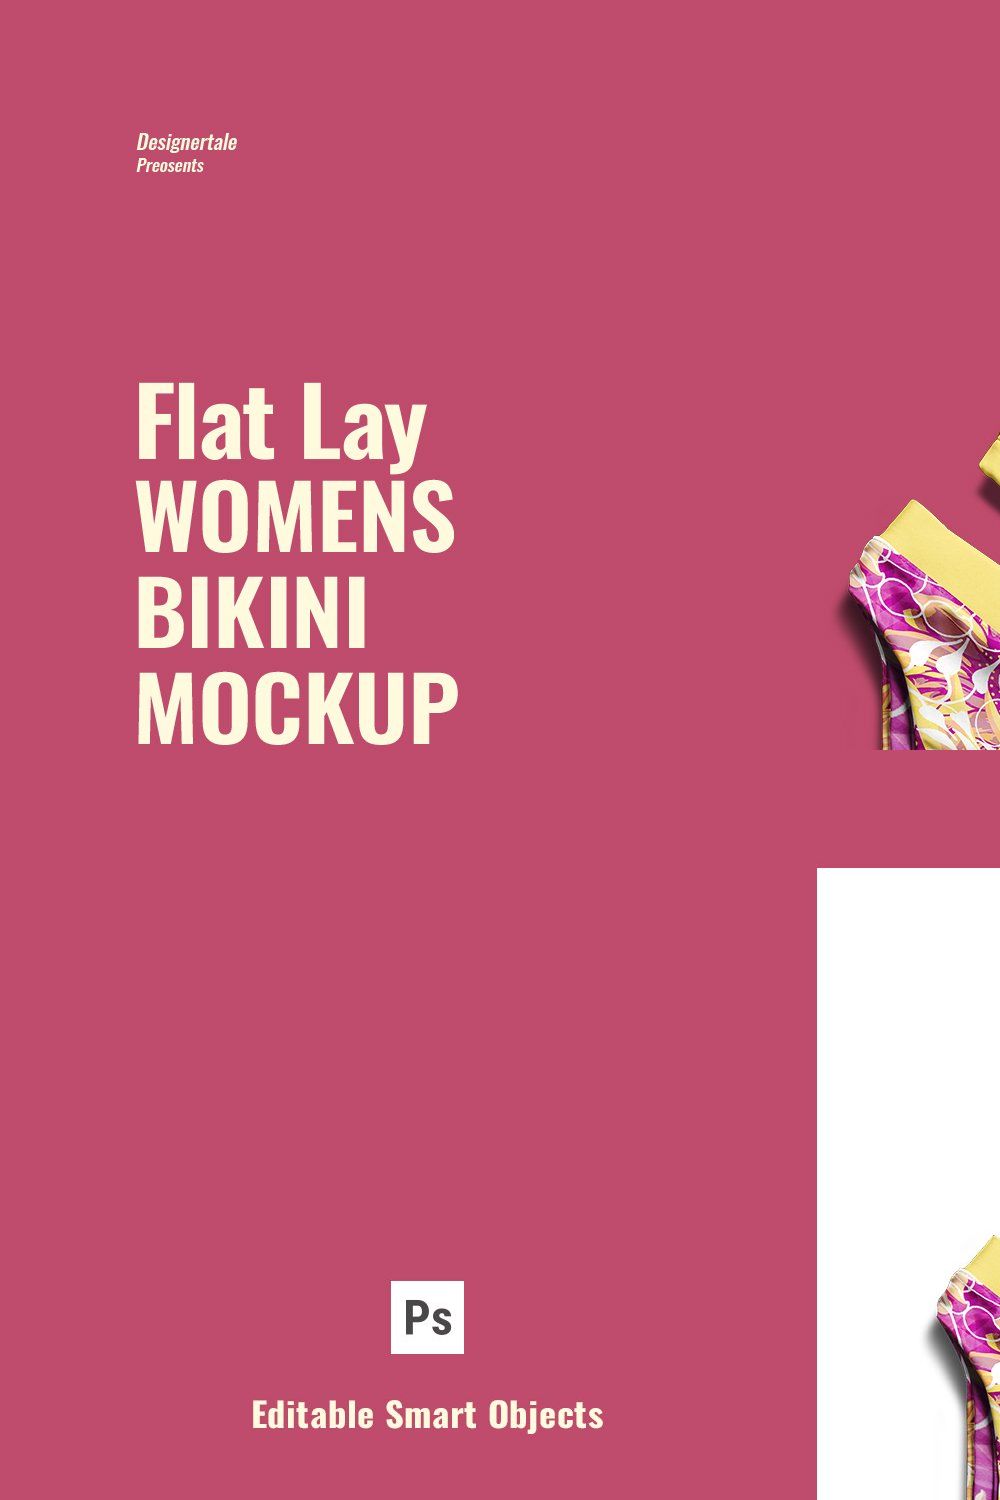 Flat Lay Womens Bikini Mockup pinterest preview image.